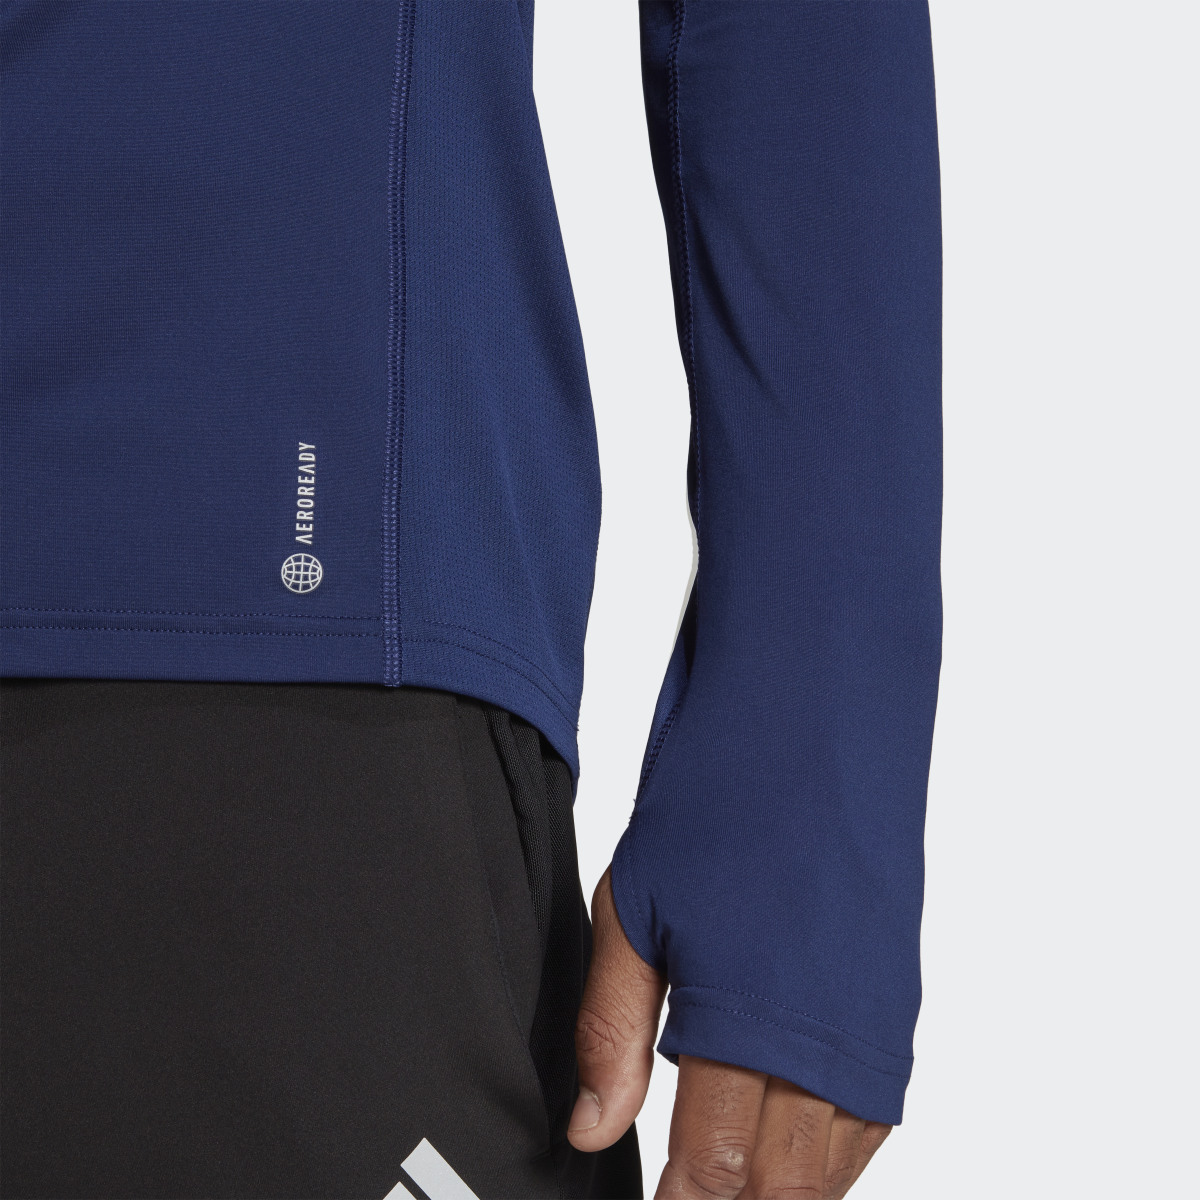 Adidas Own the Run 1/2 Zip Long-Sleeve Top. 6